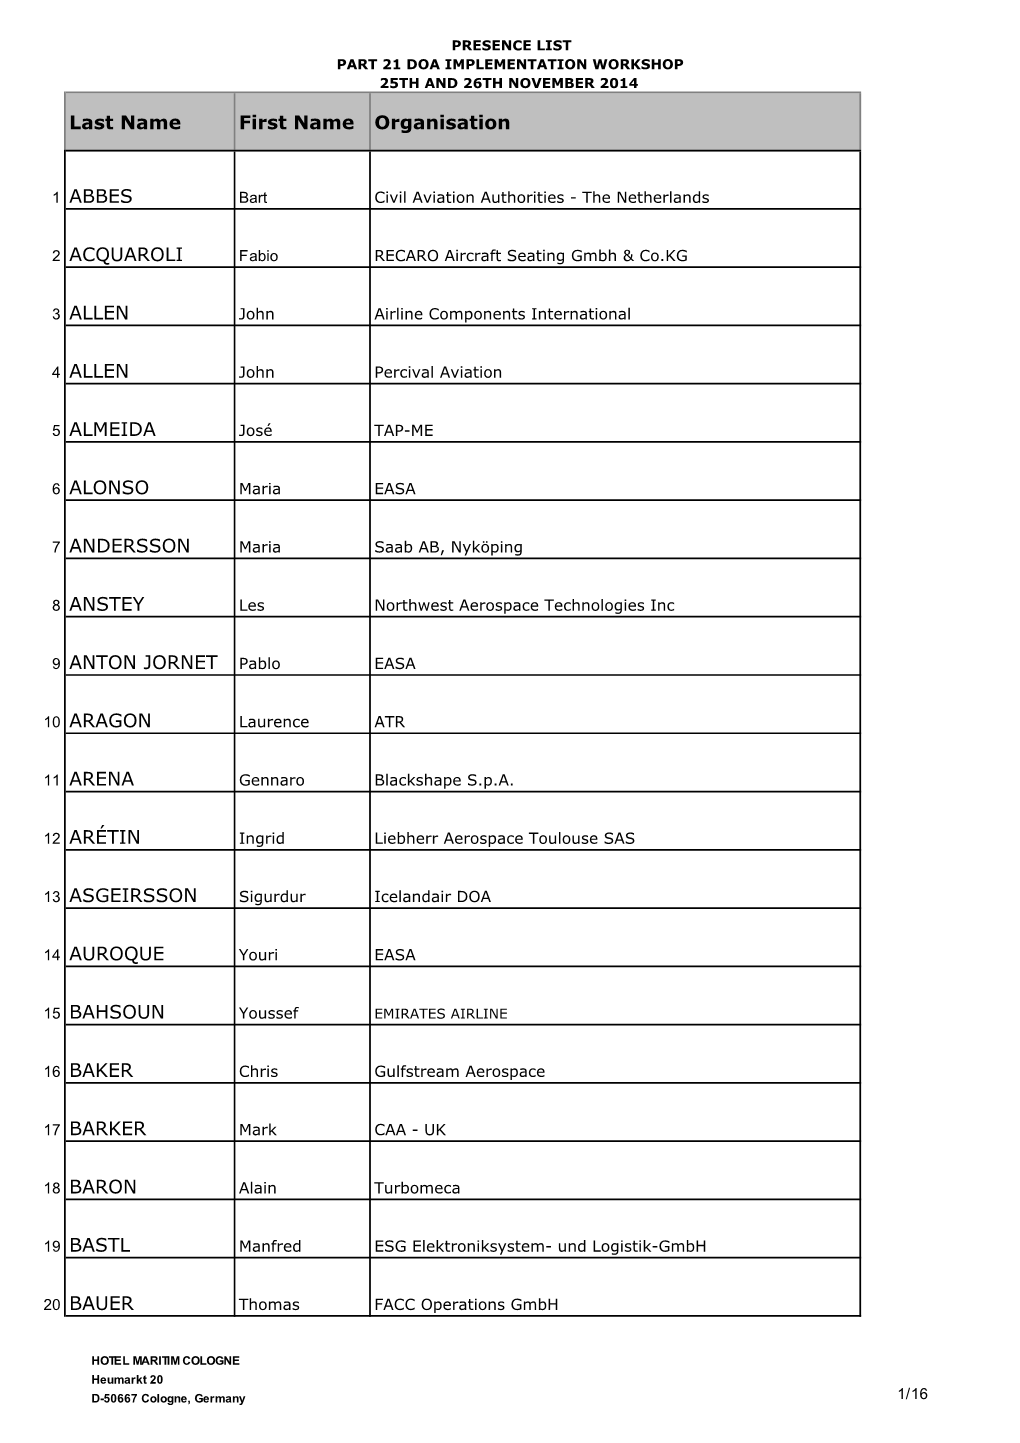 Copy of Presence List 25 November 2014